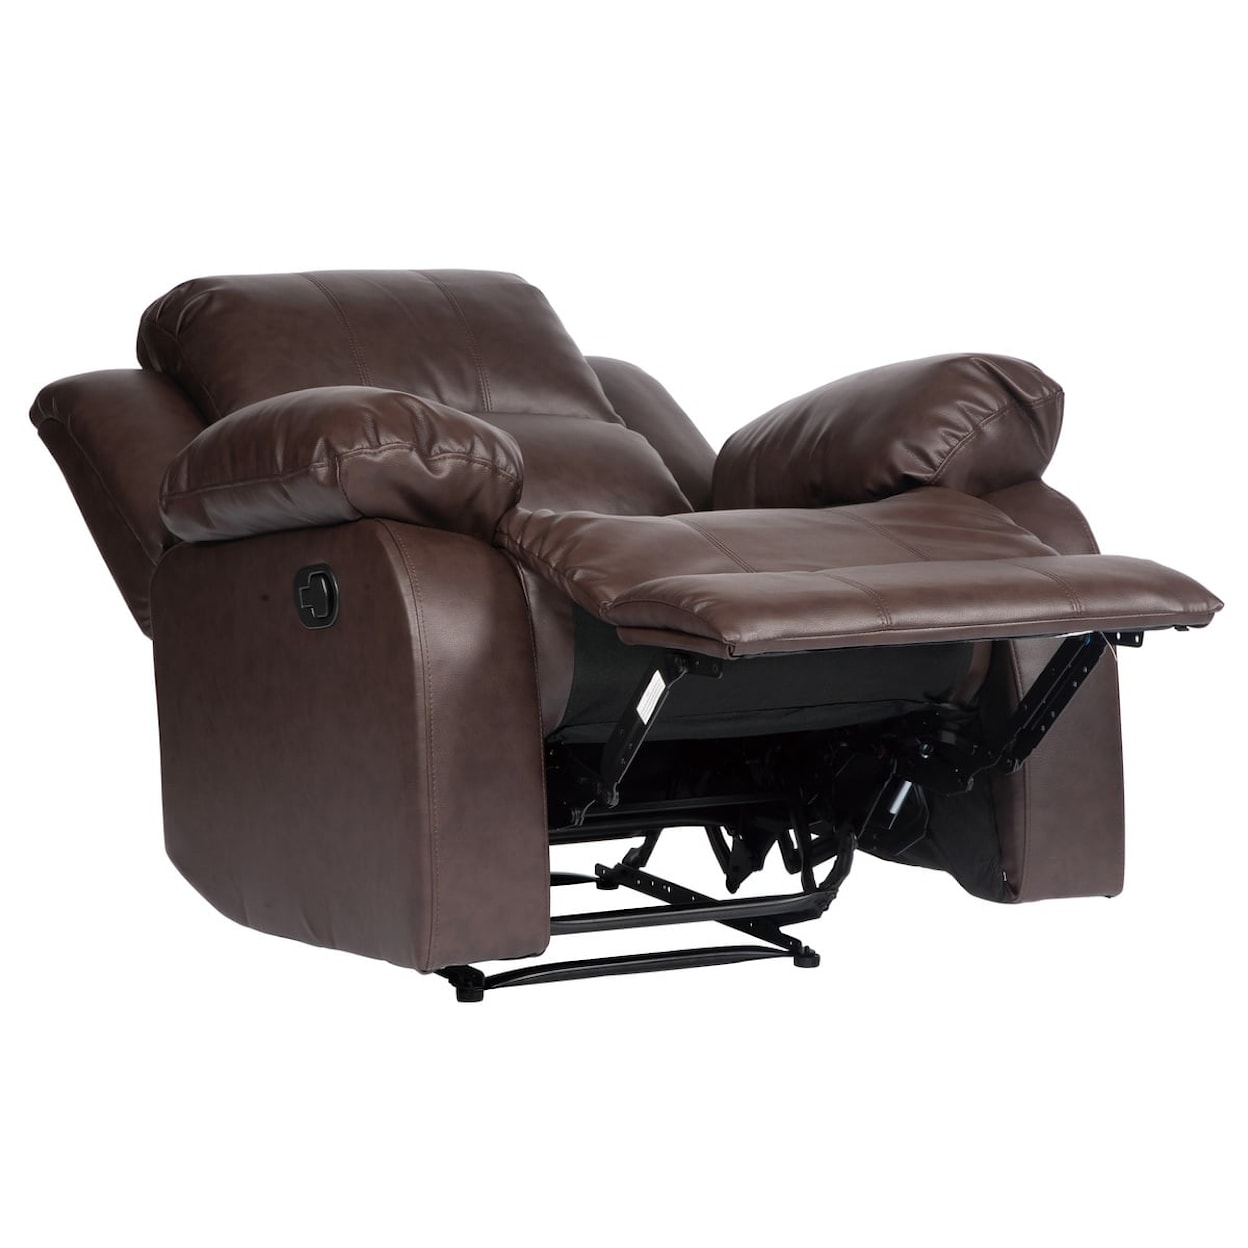 Homelegance Furniture Cranley Reclining Chair